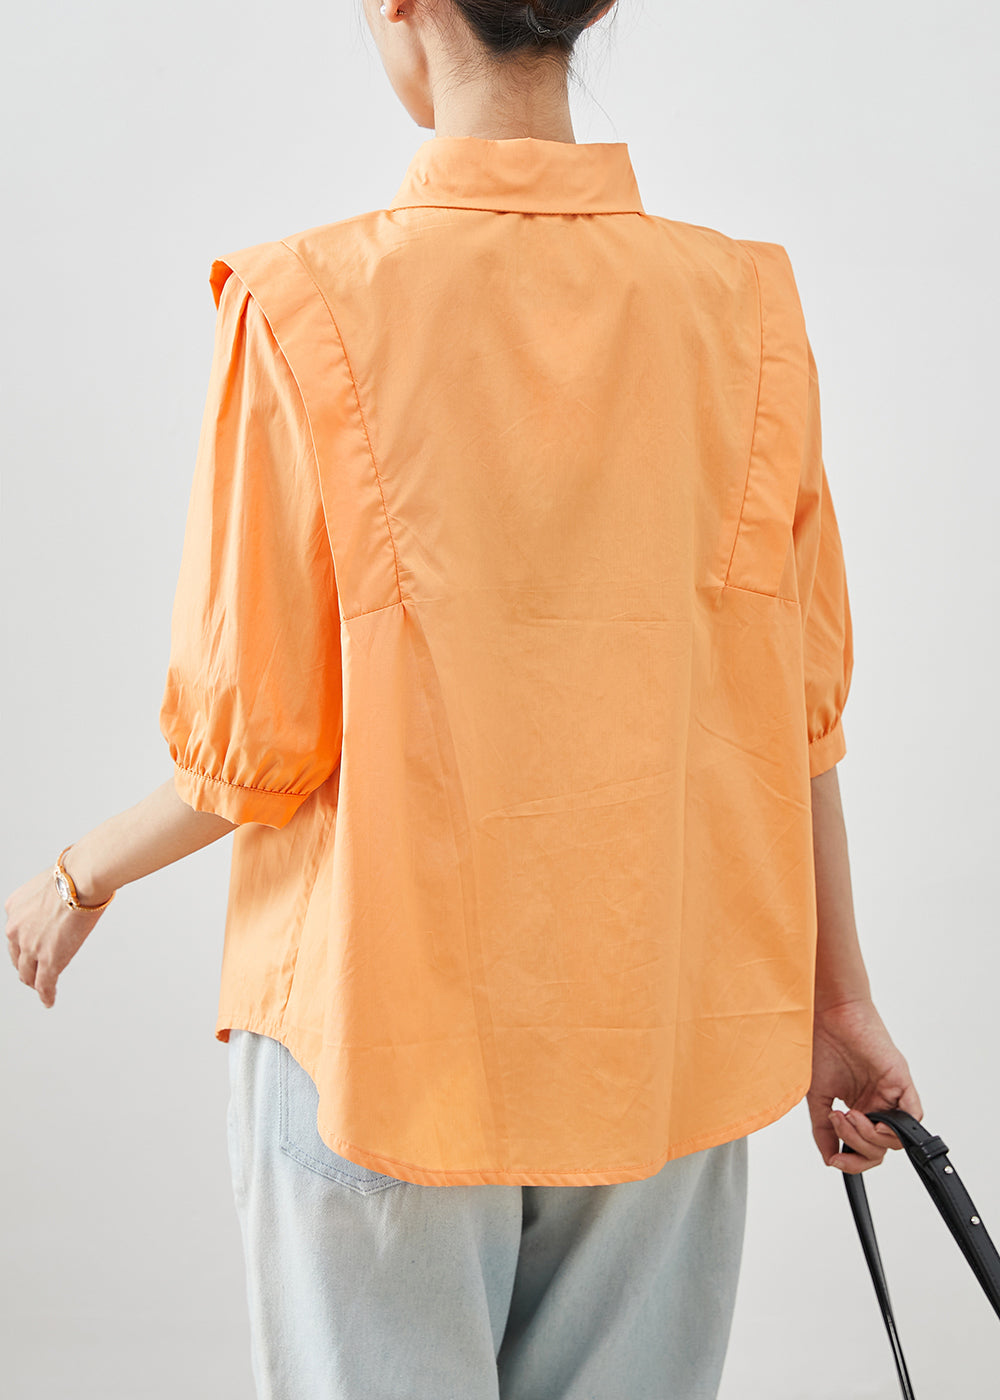 Chic Orange Peter Pan Collar Patchwork Cotton Shirts Half Sleeve Ada Fashion